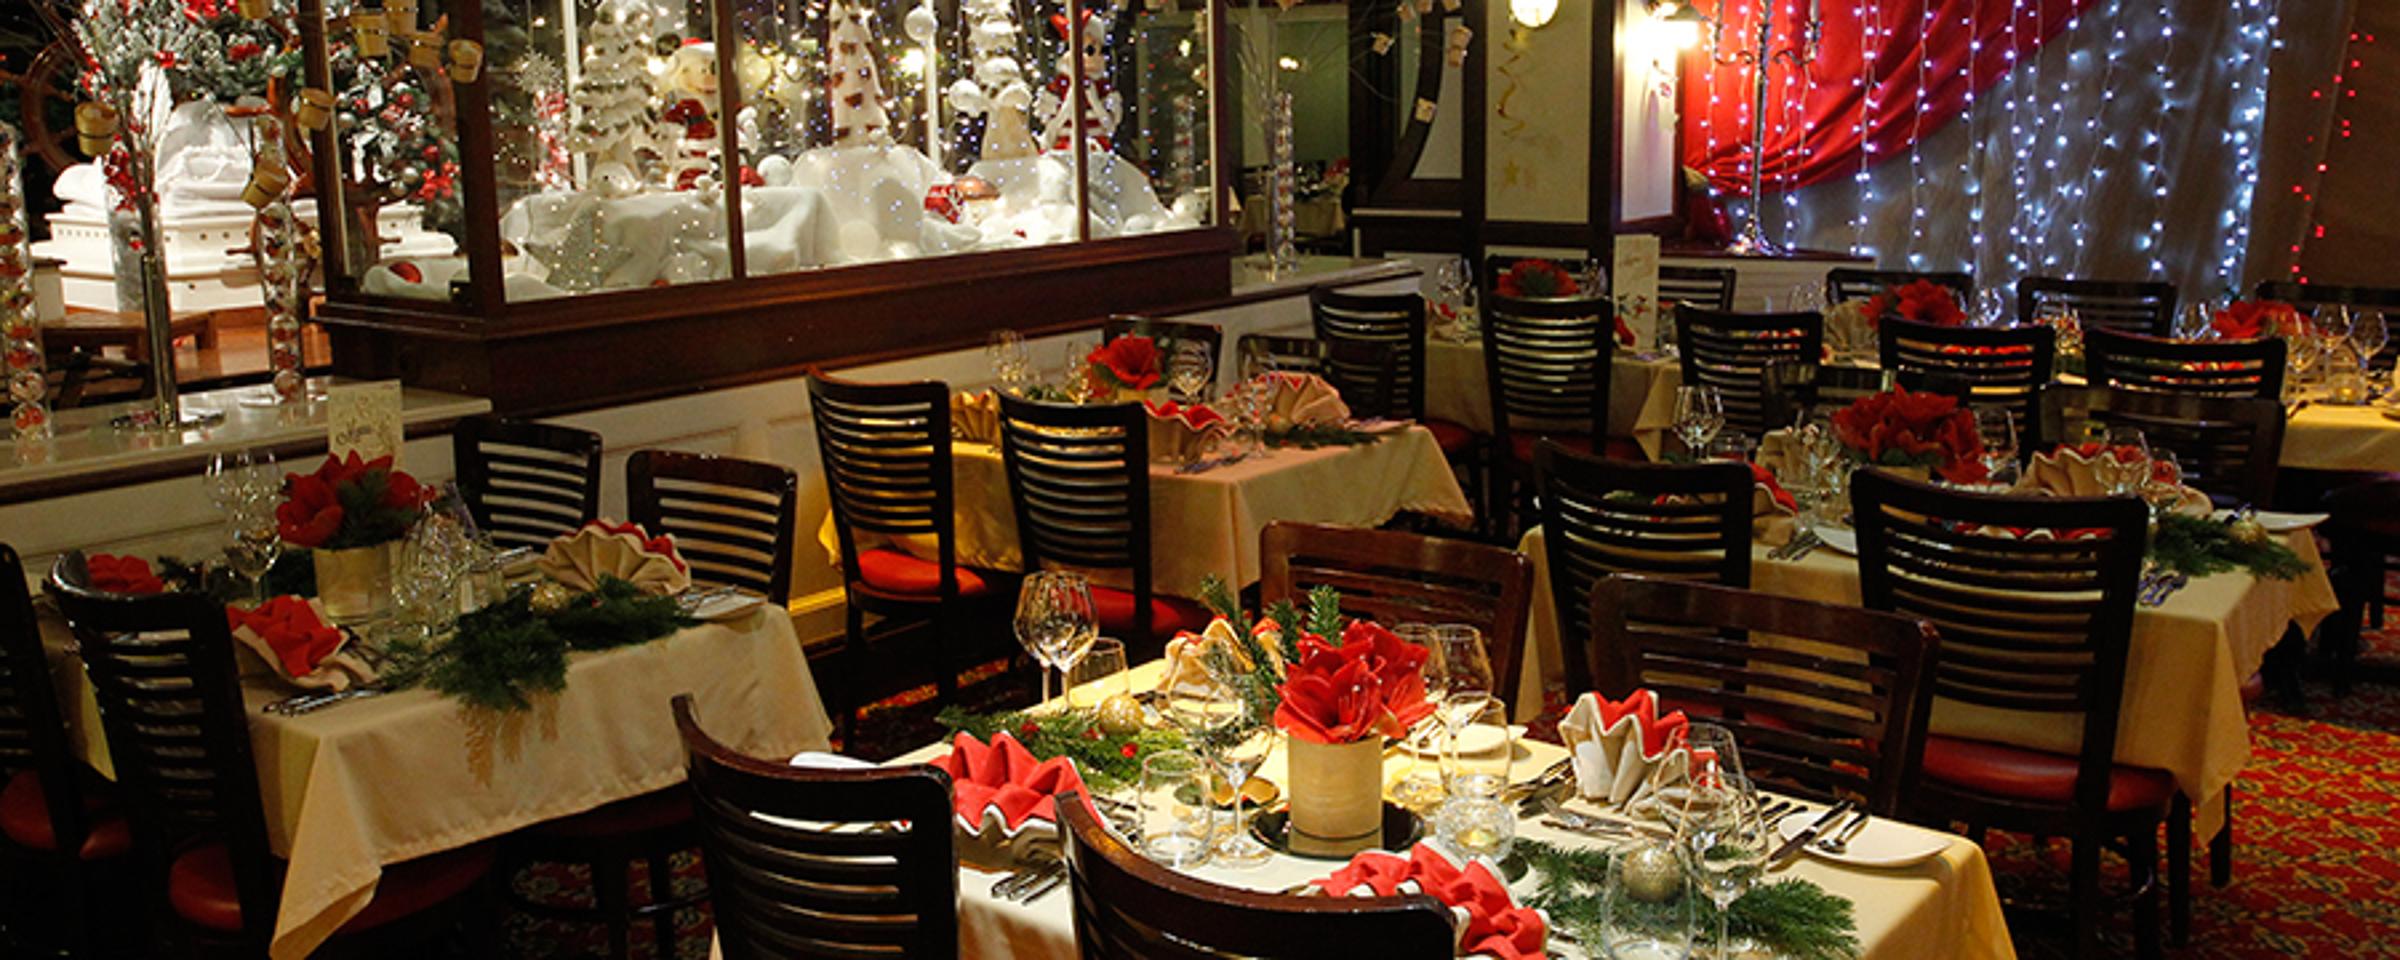 New Year's Eve Dinner - Disney dining plan | Disneyland Paris